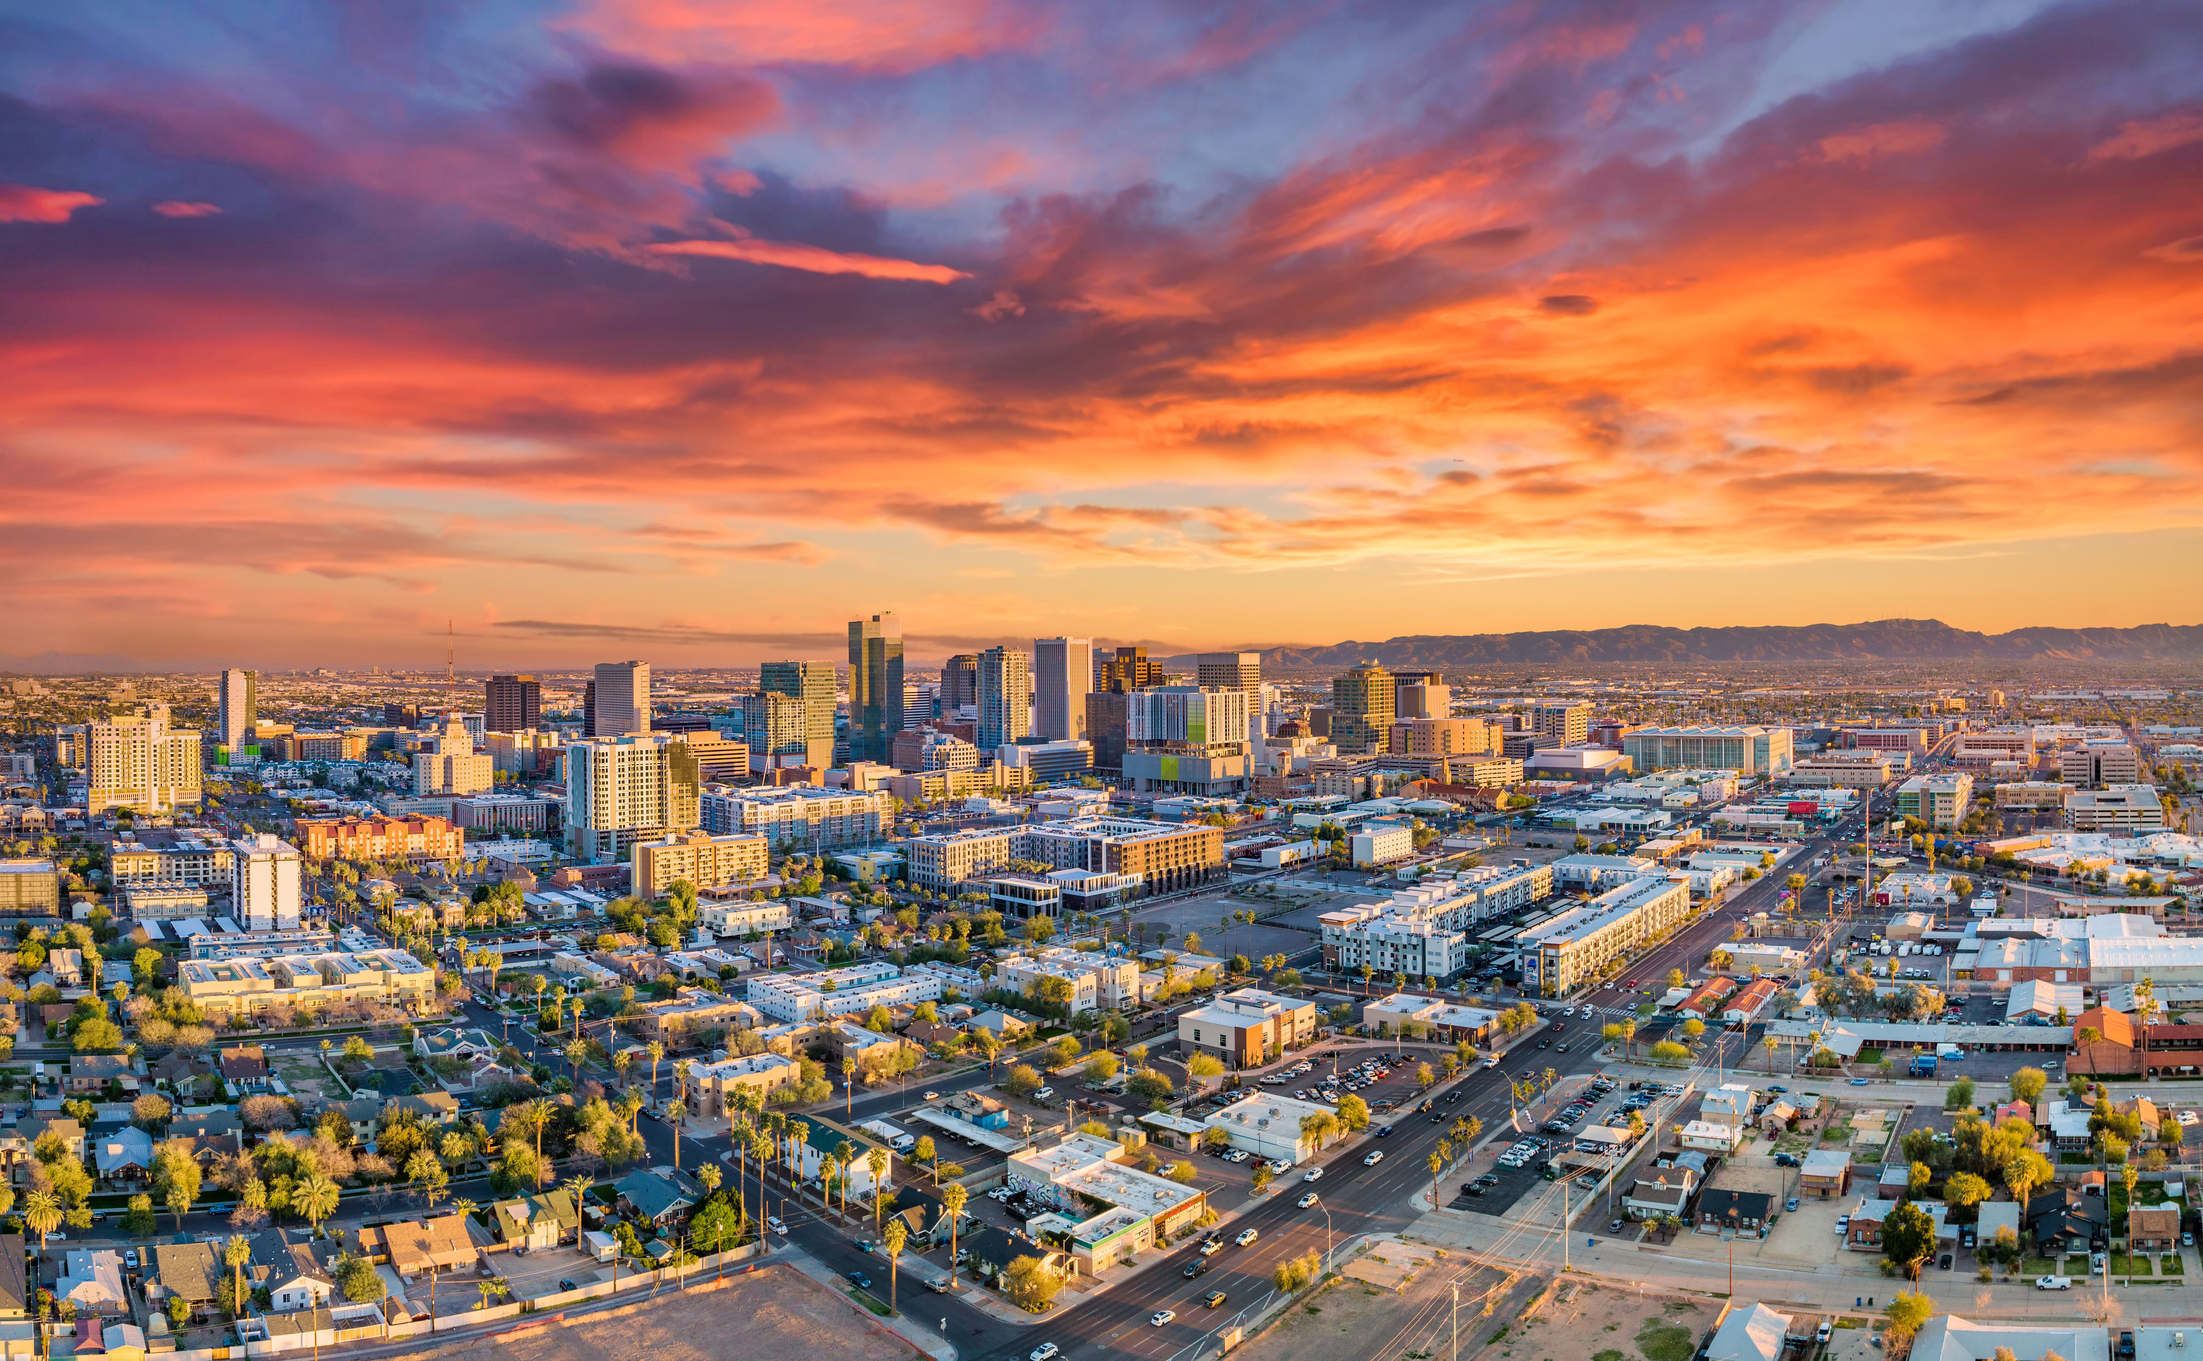 A sunset scene above buildings in Phoenix.